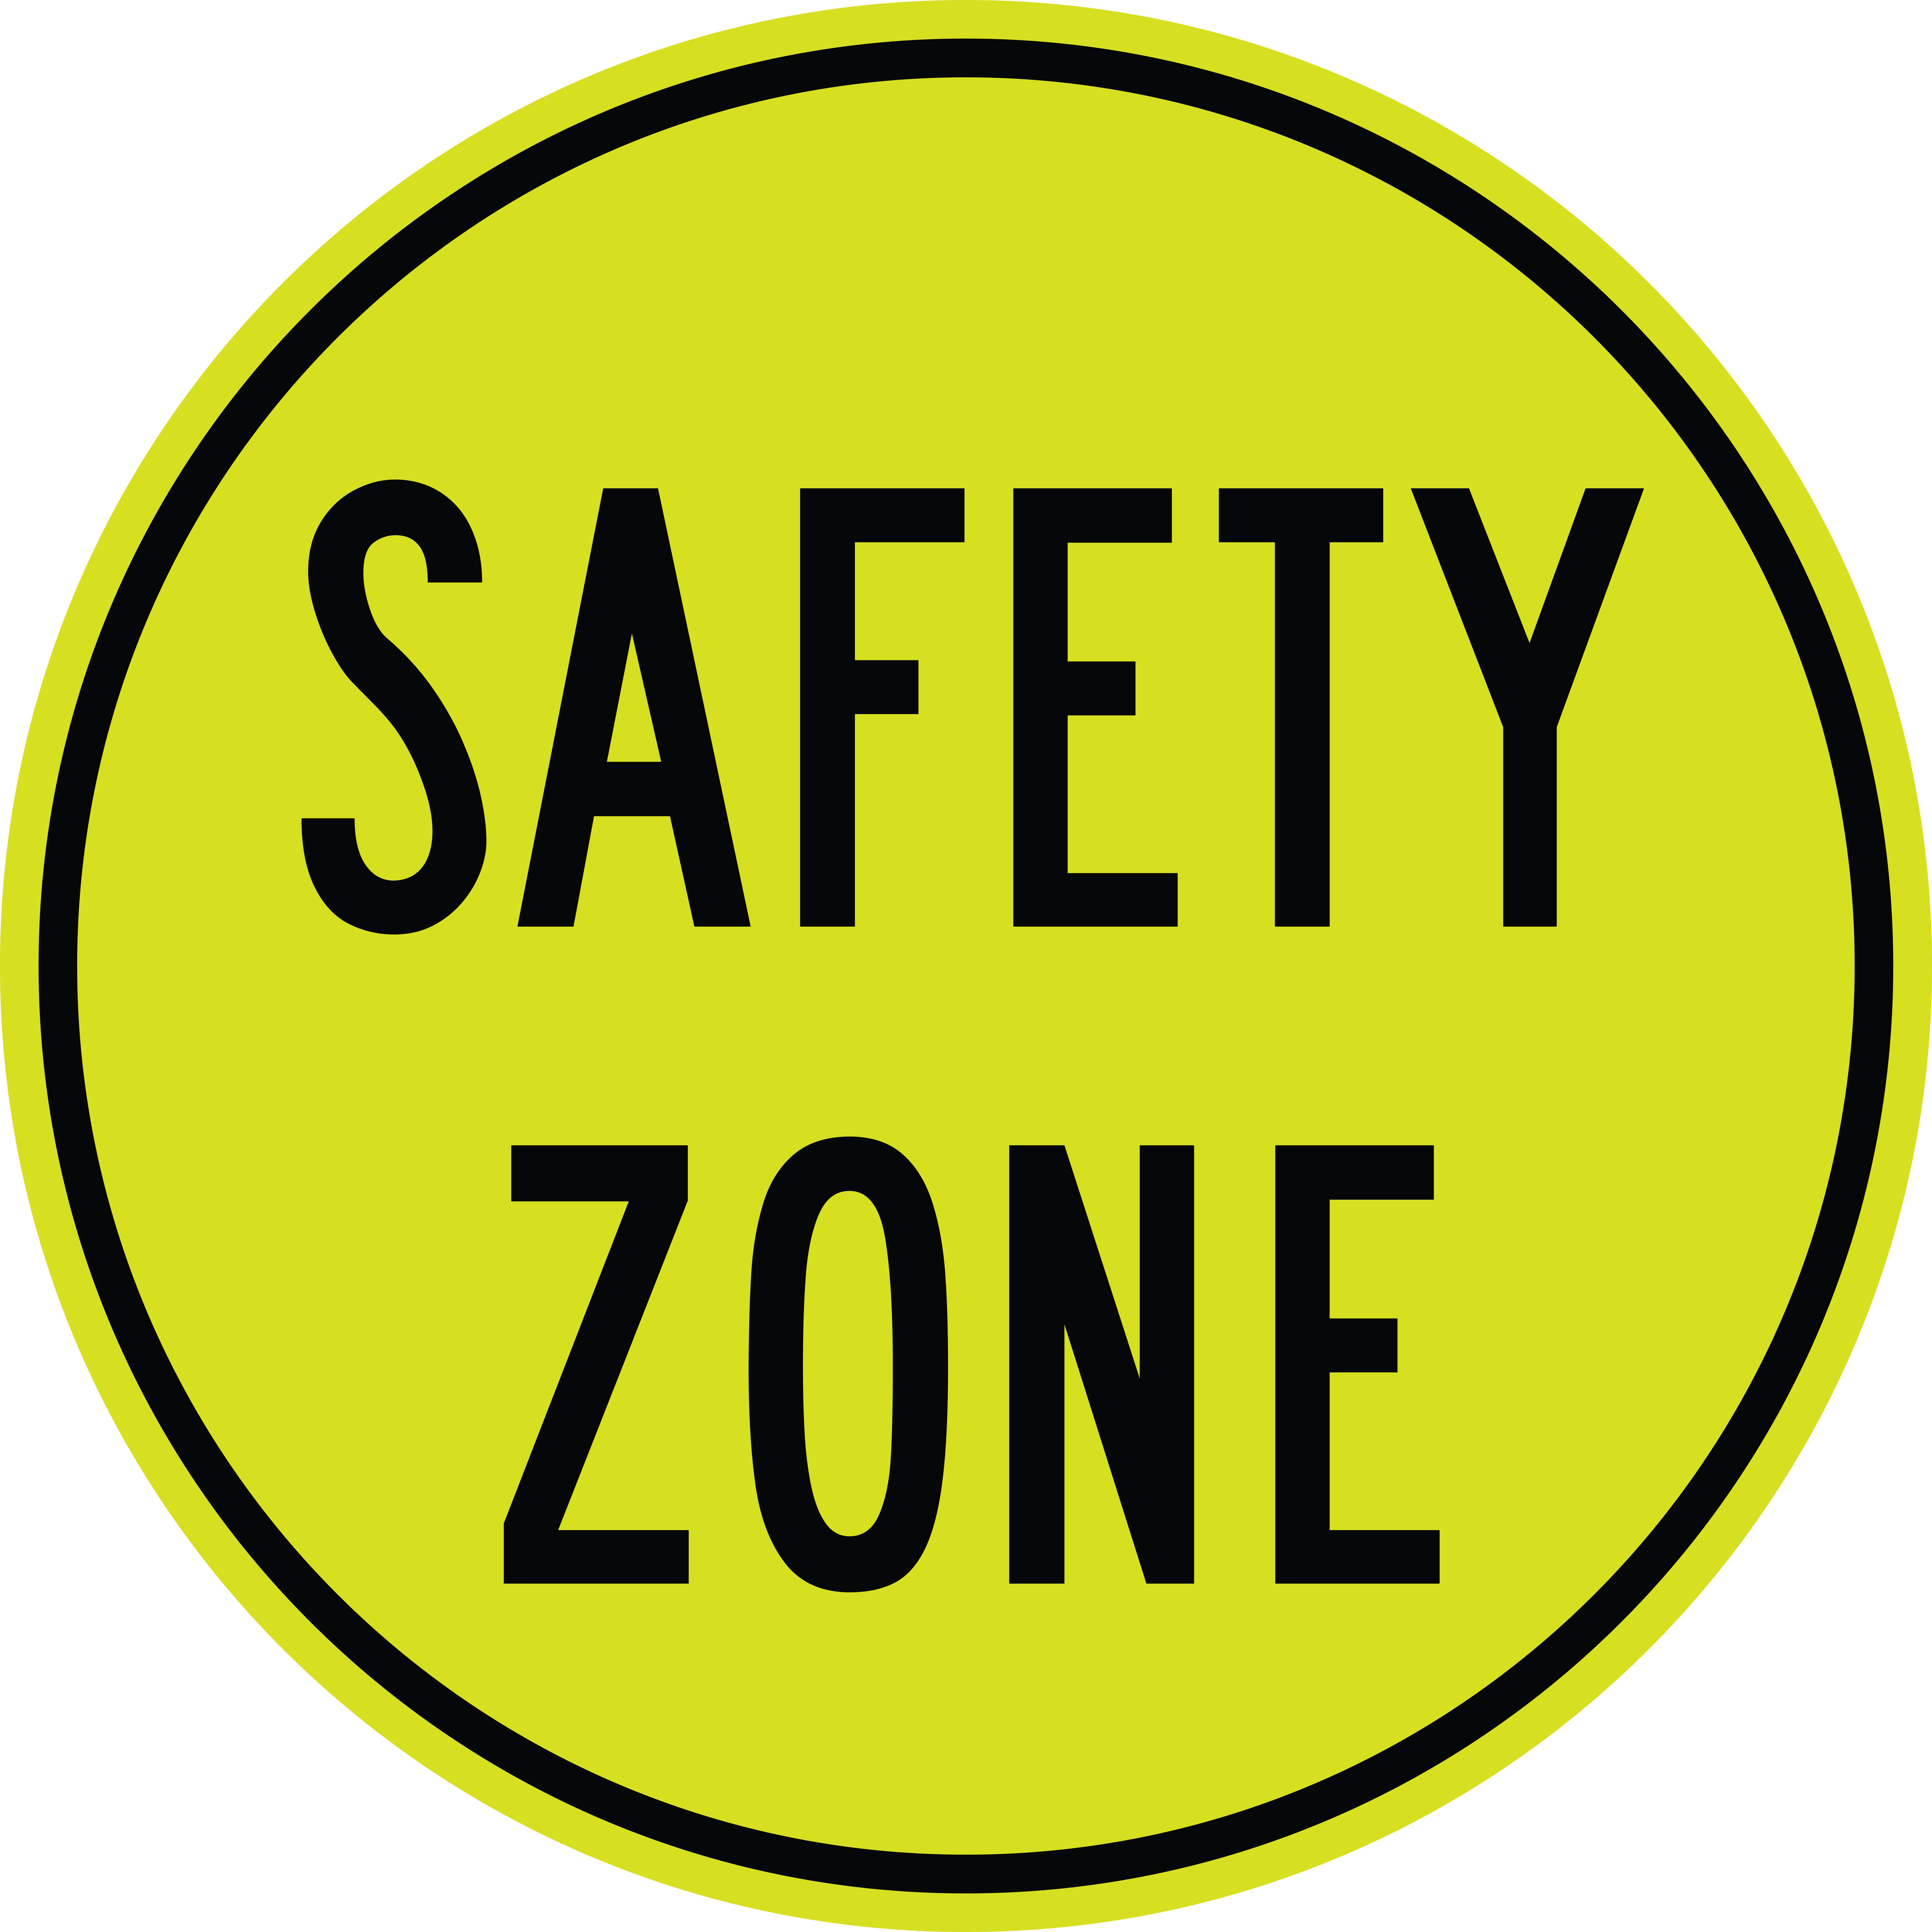 Regulatory Signs - Safety Zone